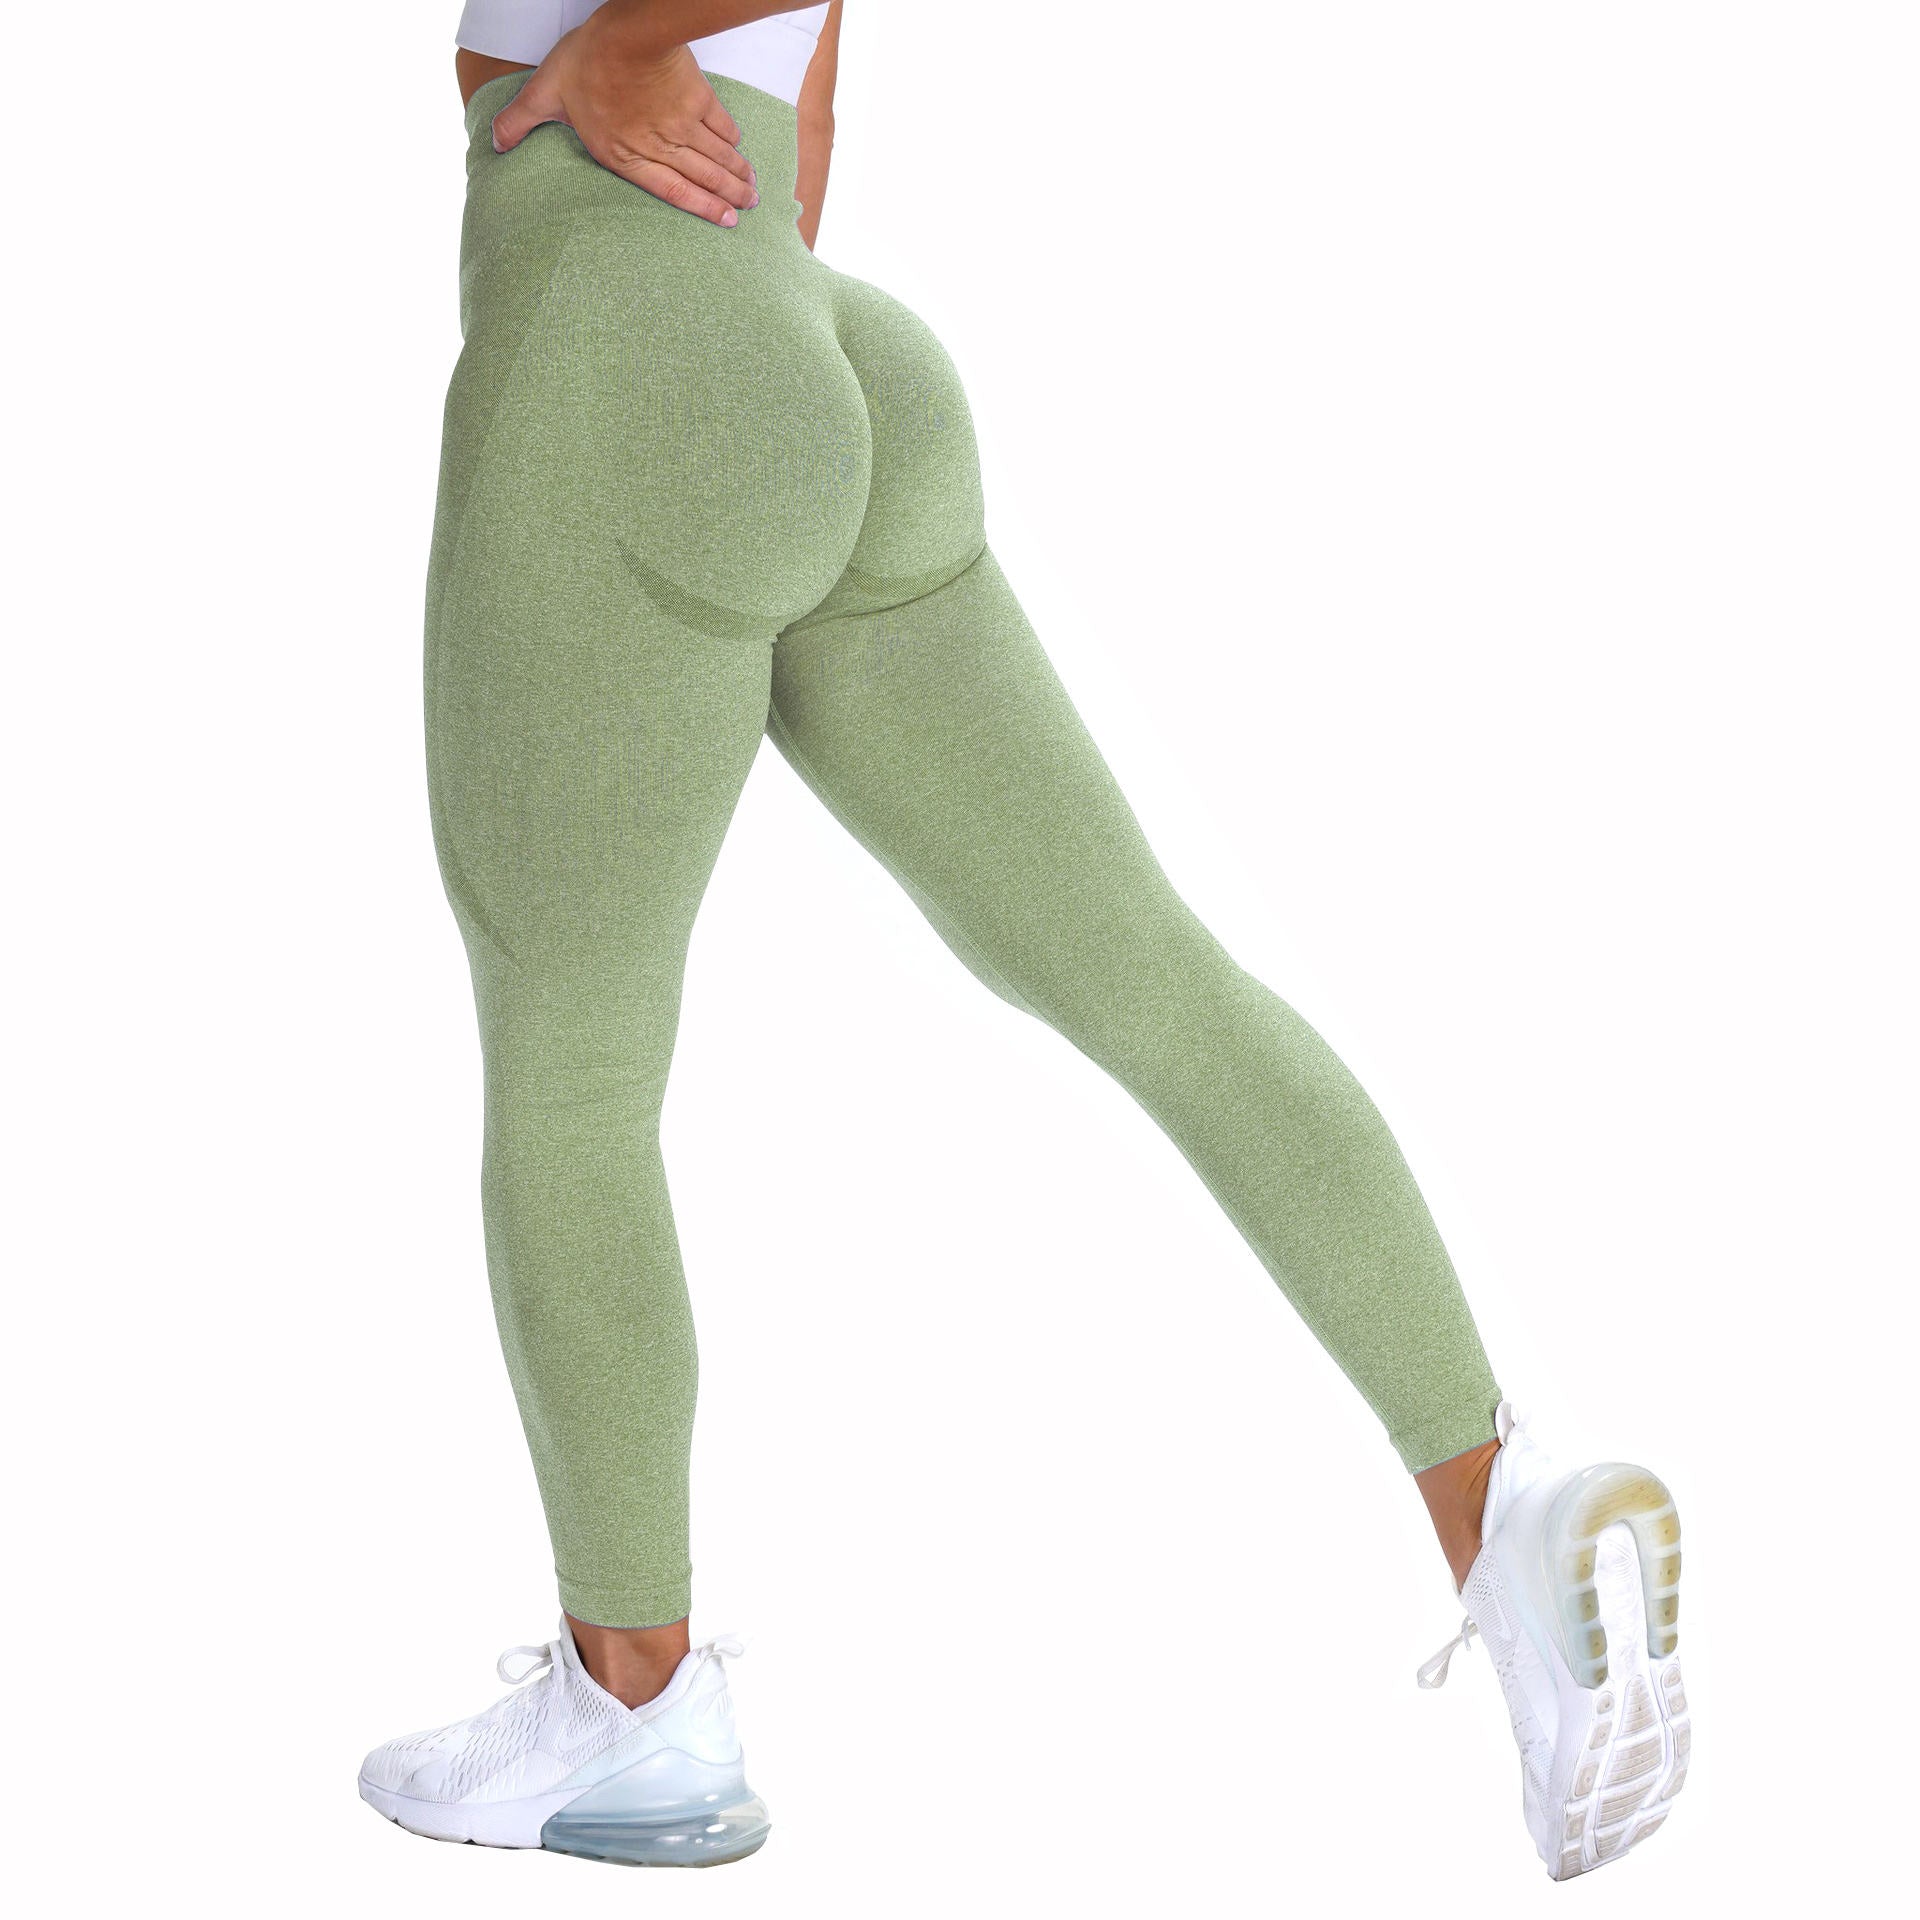 Dndkilg Vintage Leggings for Women Skin Tone Thermal Warm Sheer Tights  Tummy Control Petite Leg Warmers Panty Hose Green 2XL